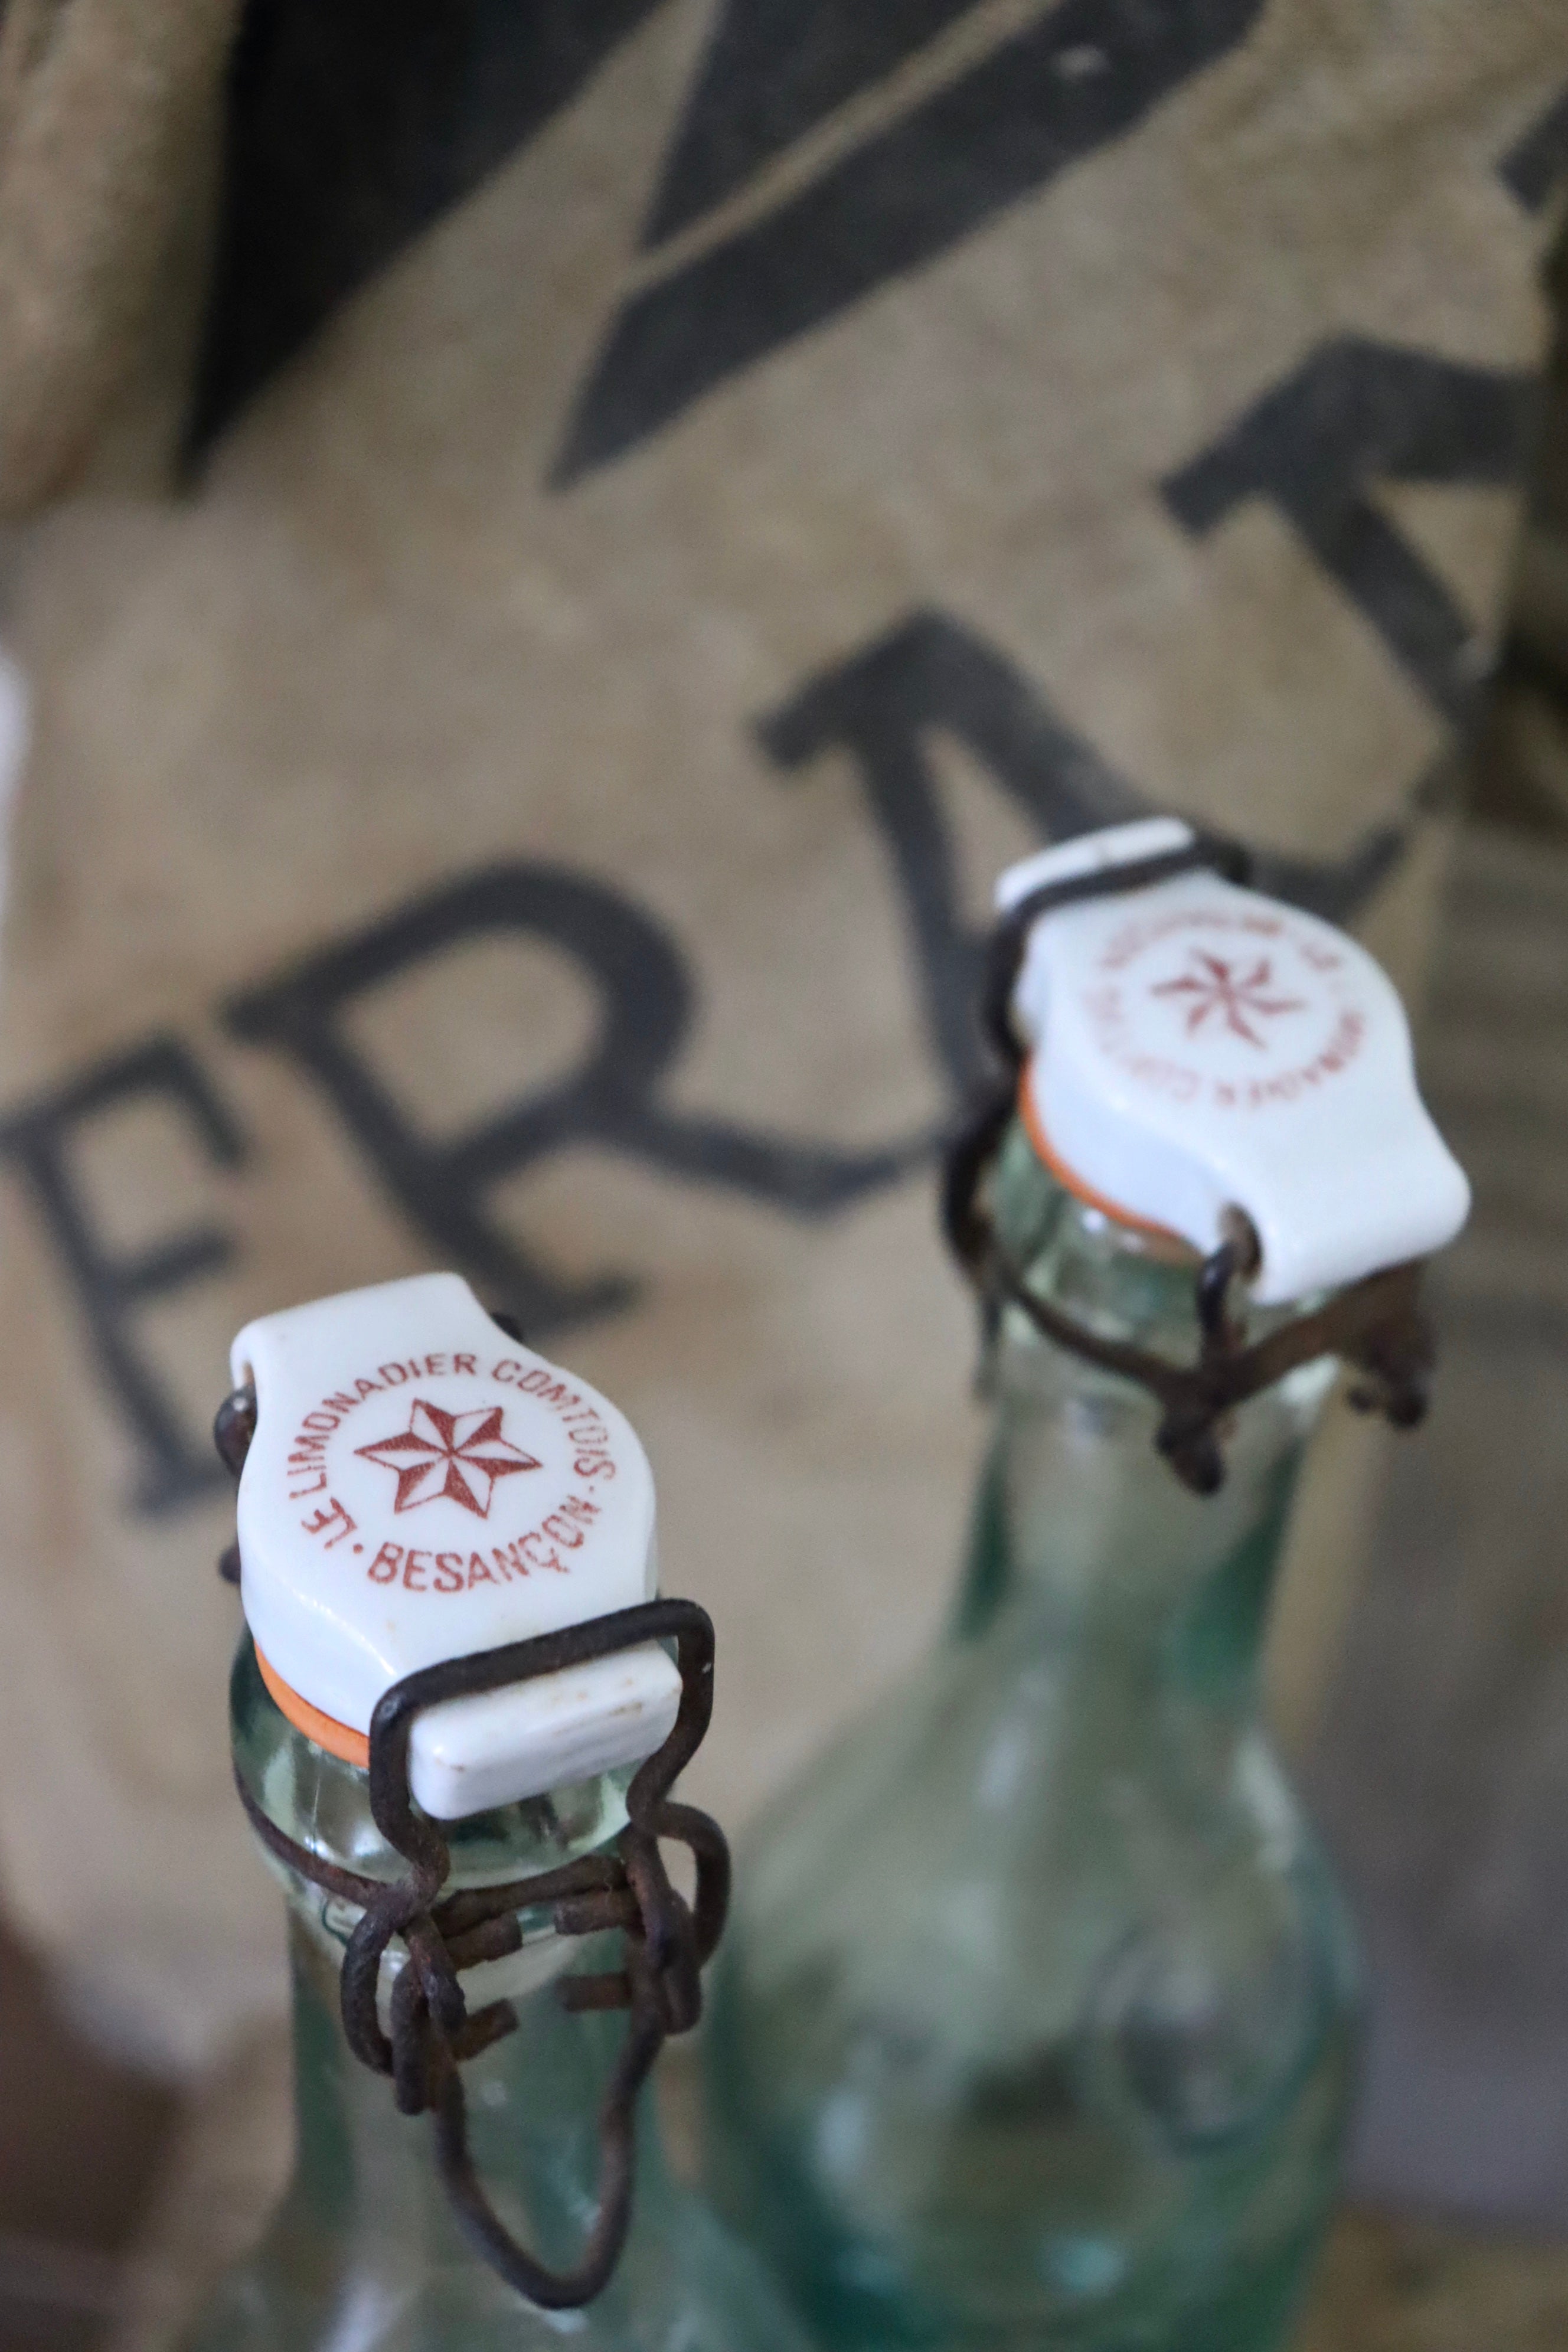 Antique French Le Limonadier Bistro Bottles